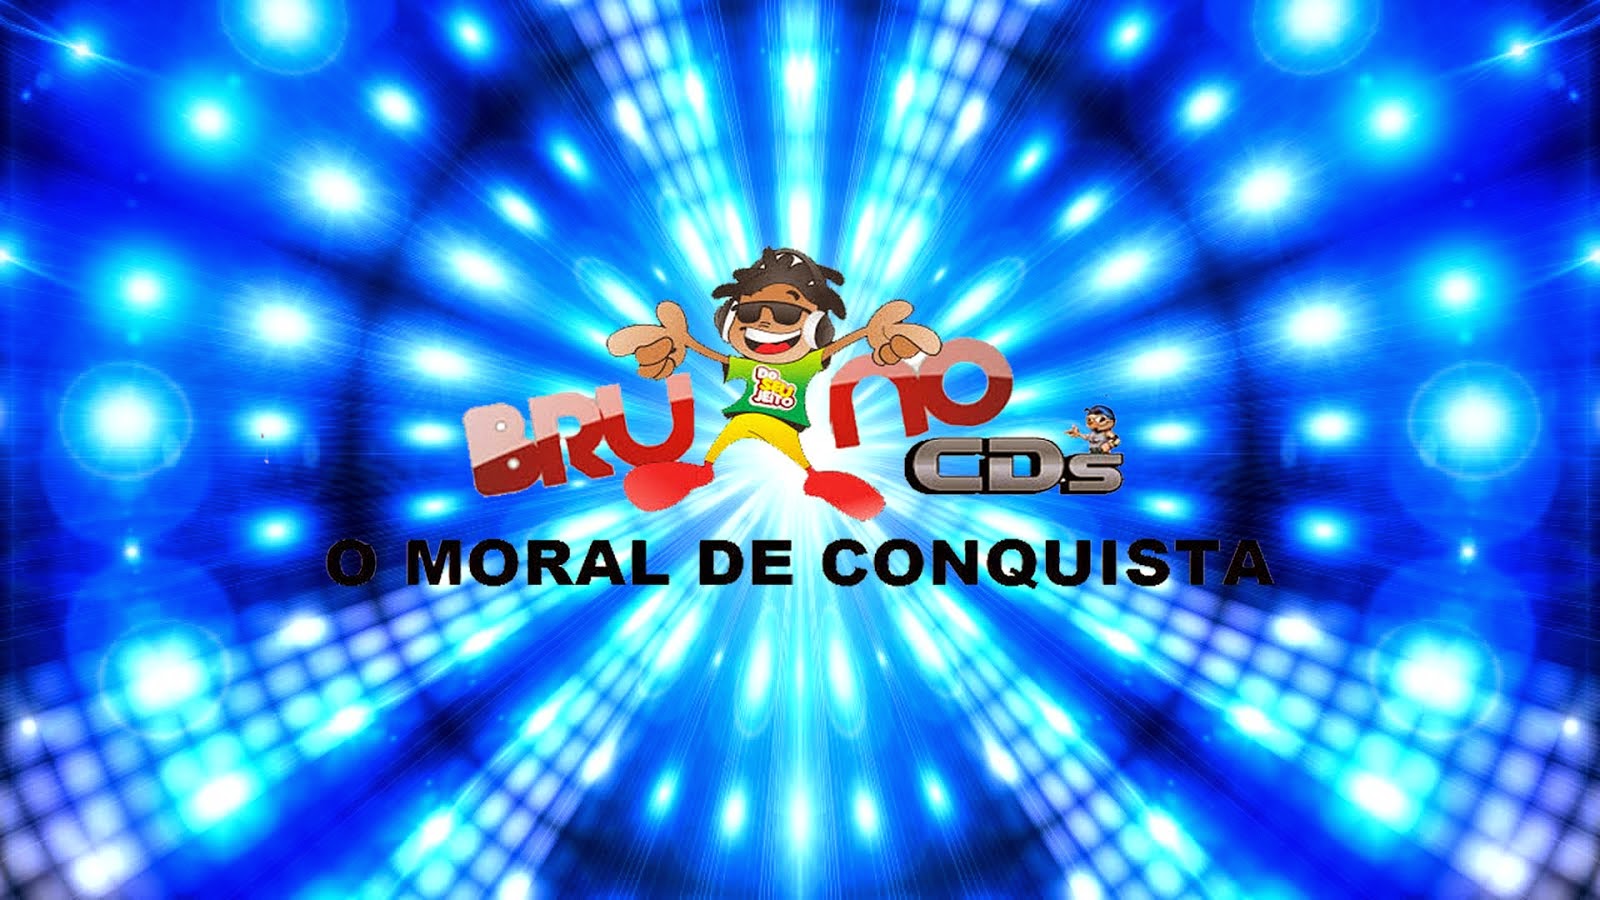 BRUNNO CD'S O MORAL DE CONQUISTA